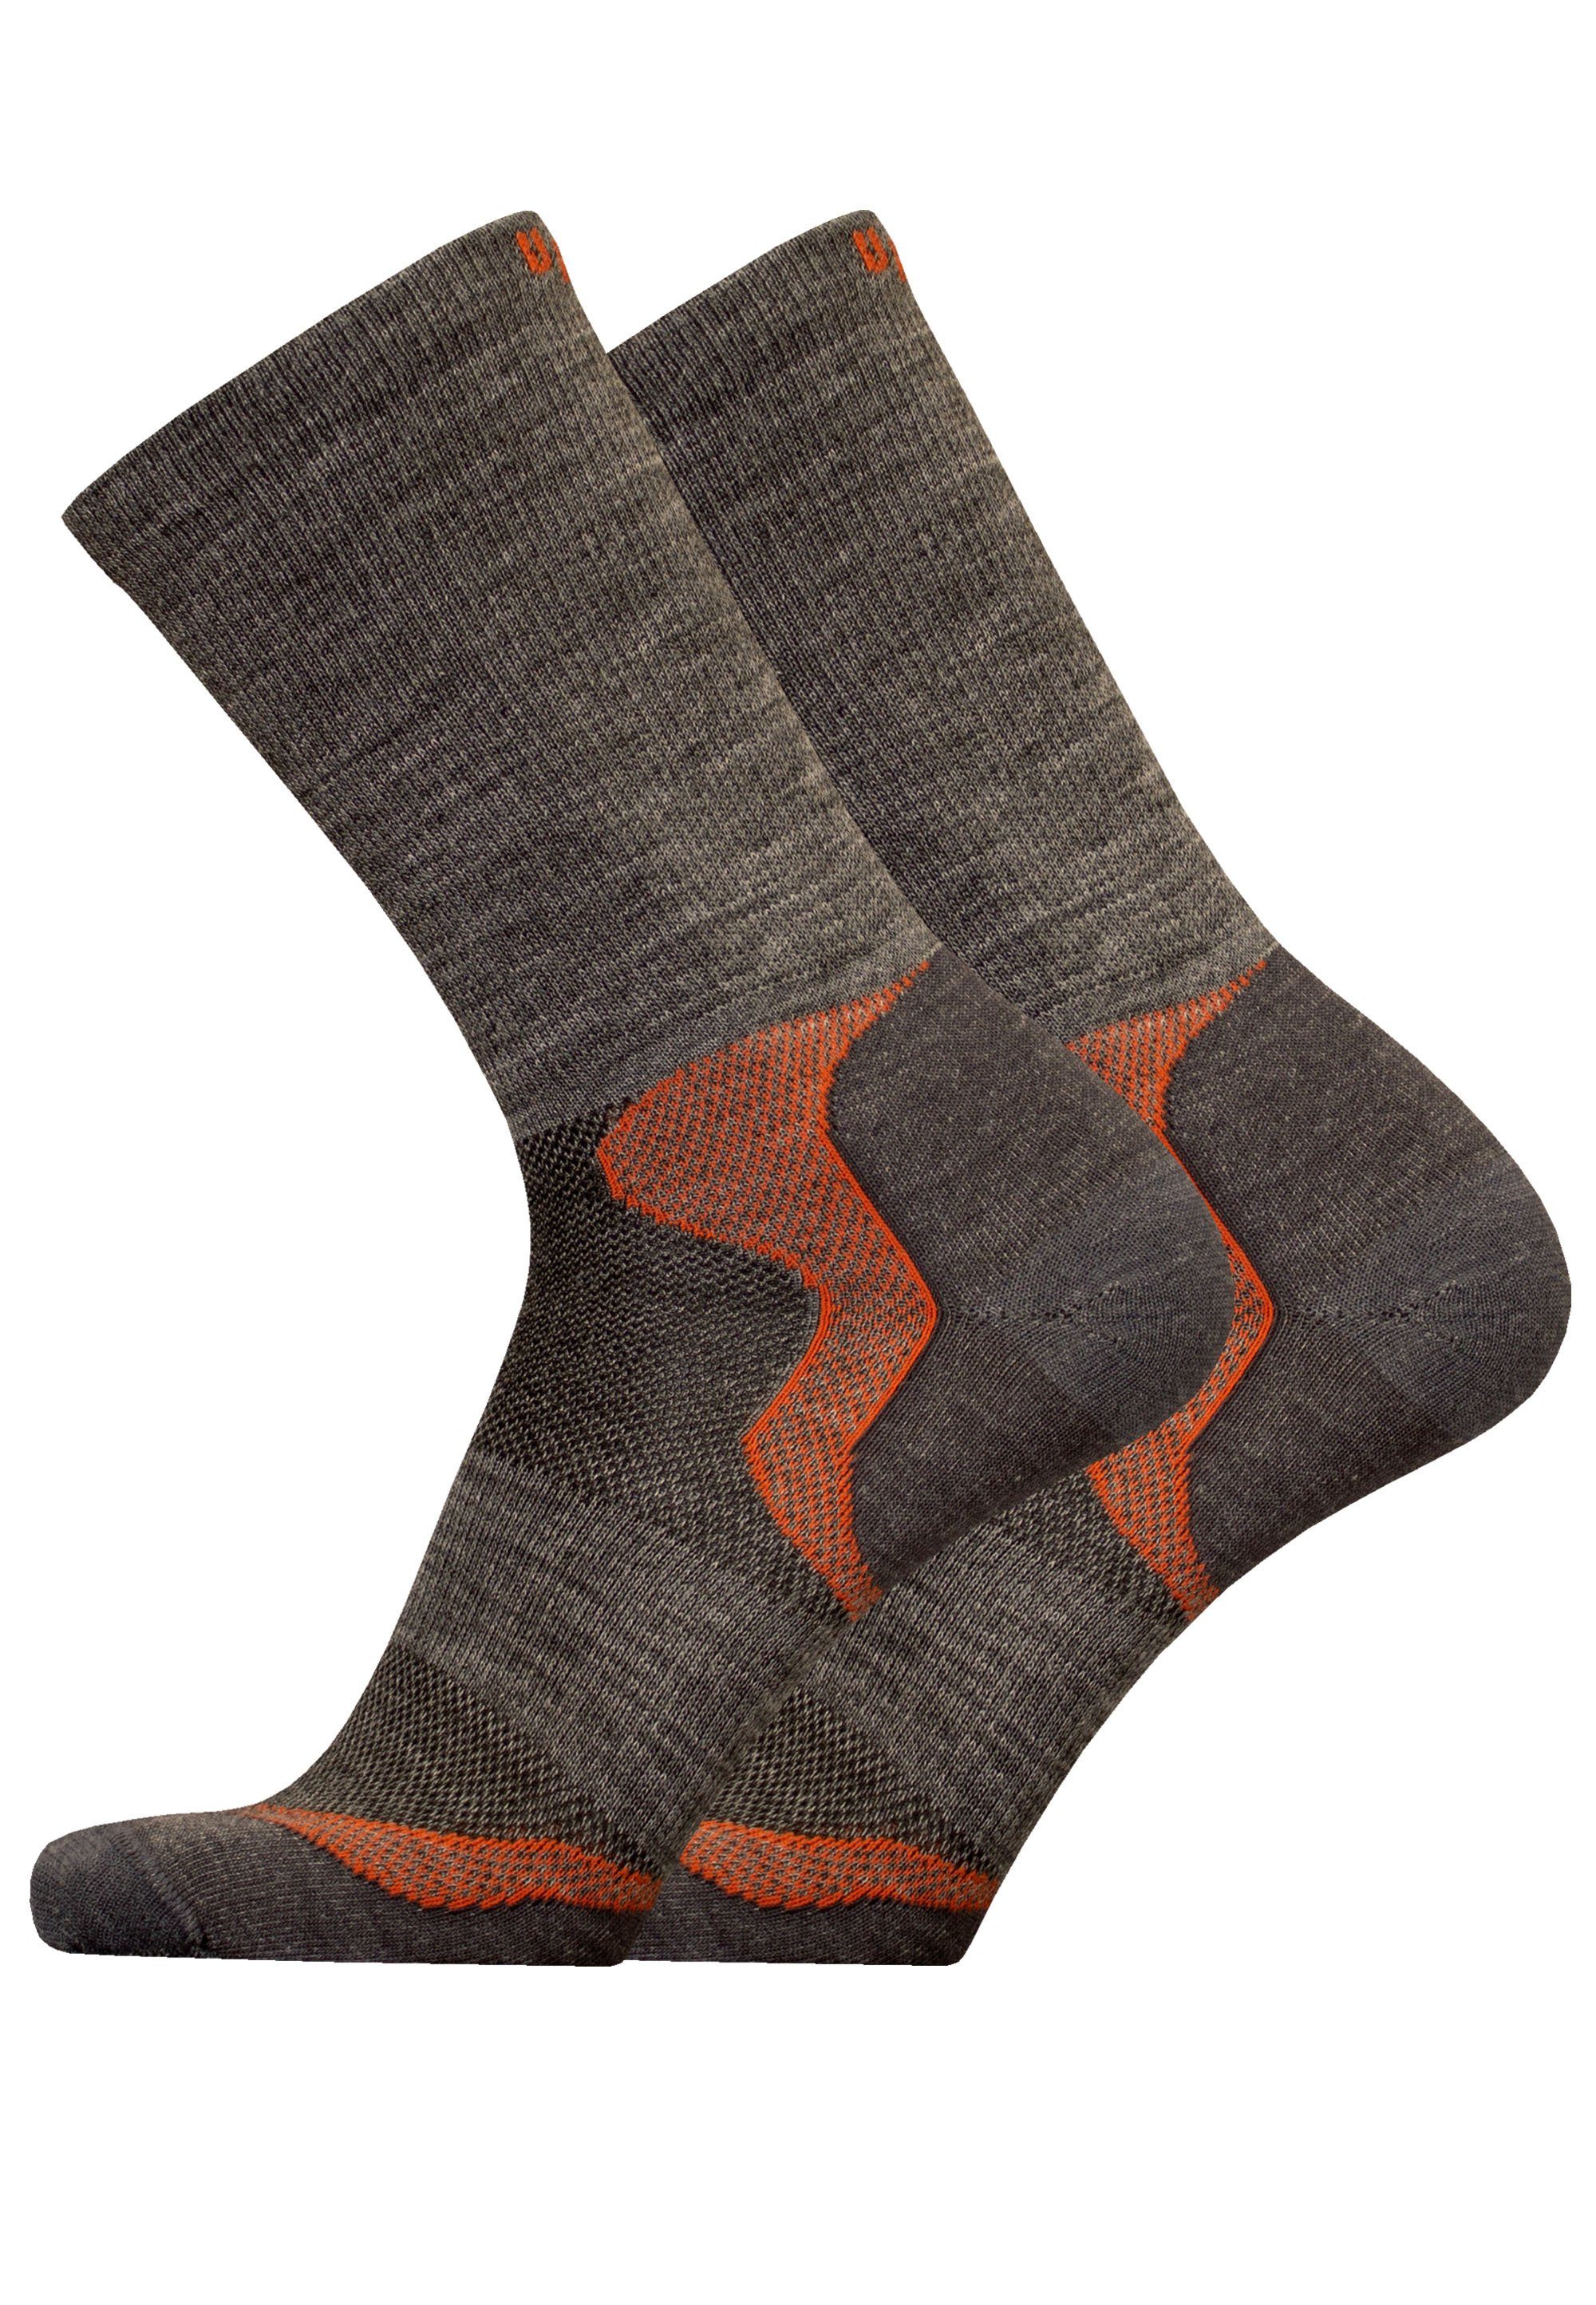 UphillSport Socken MALLA (2-Paar) mit atmungsaktiver Funktion grau-meliert